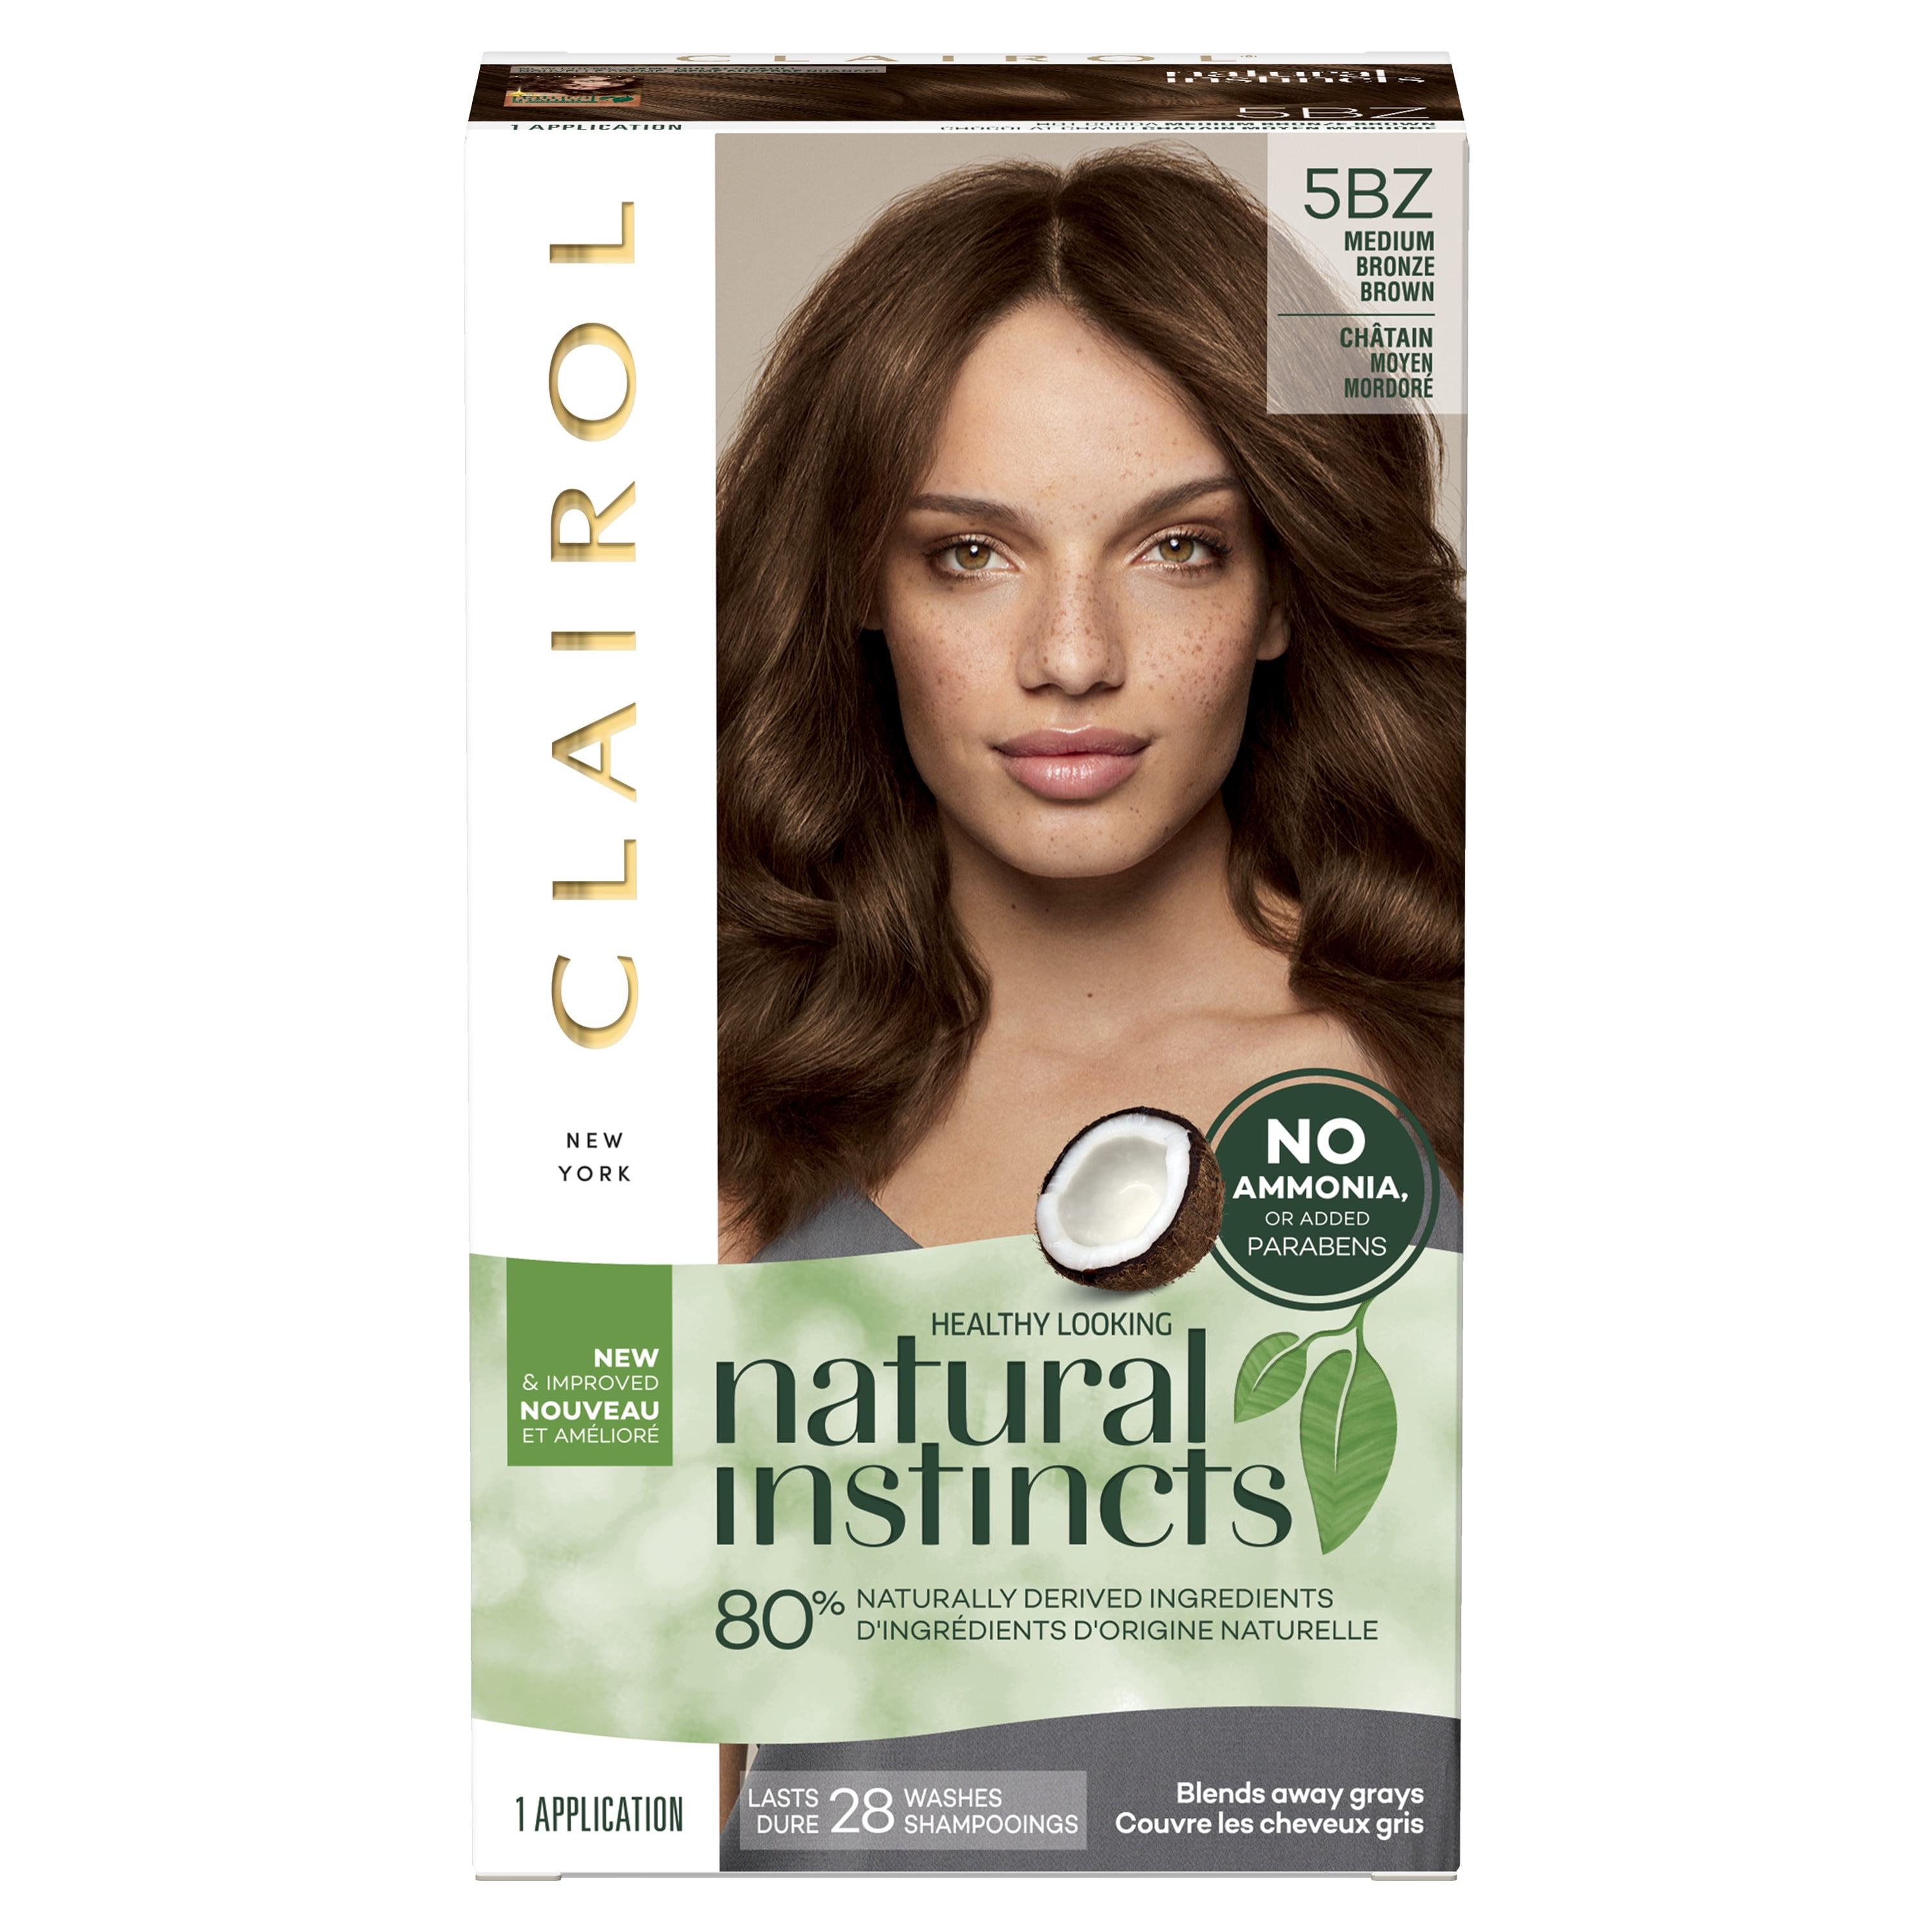 Clairol Natural Instincts Demi-Permanent Hair Color Creme, 5BZ Medium Bronze  Brown, Hair Dye, 1 Application 